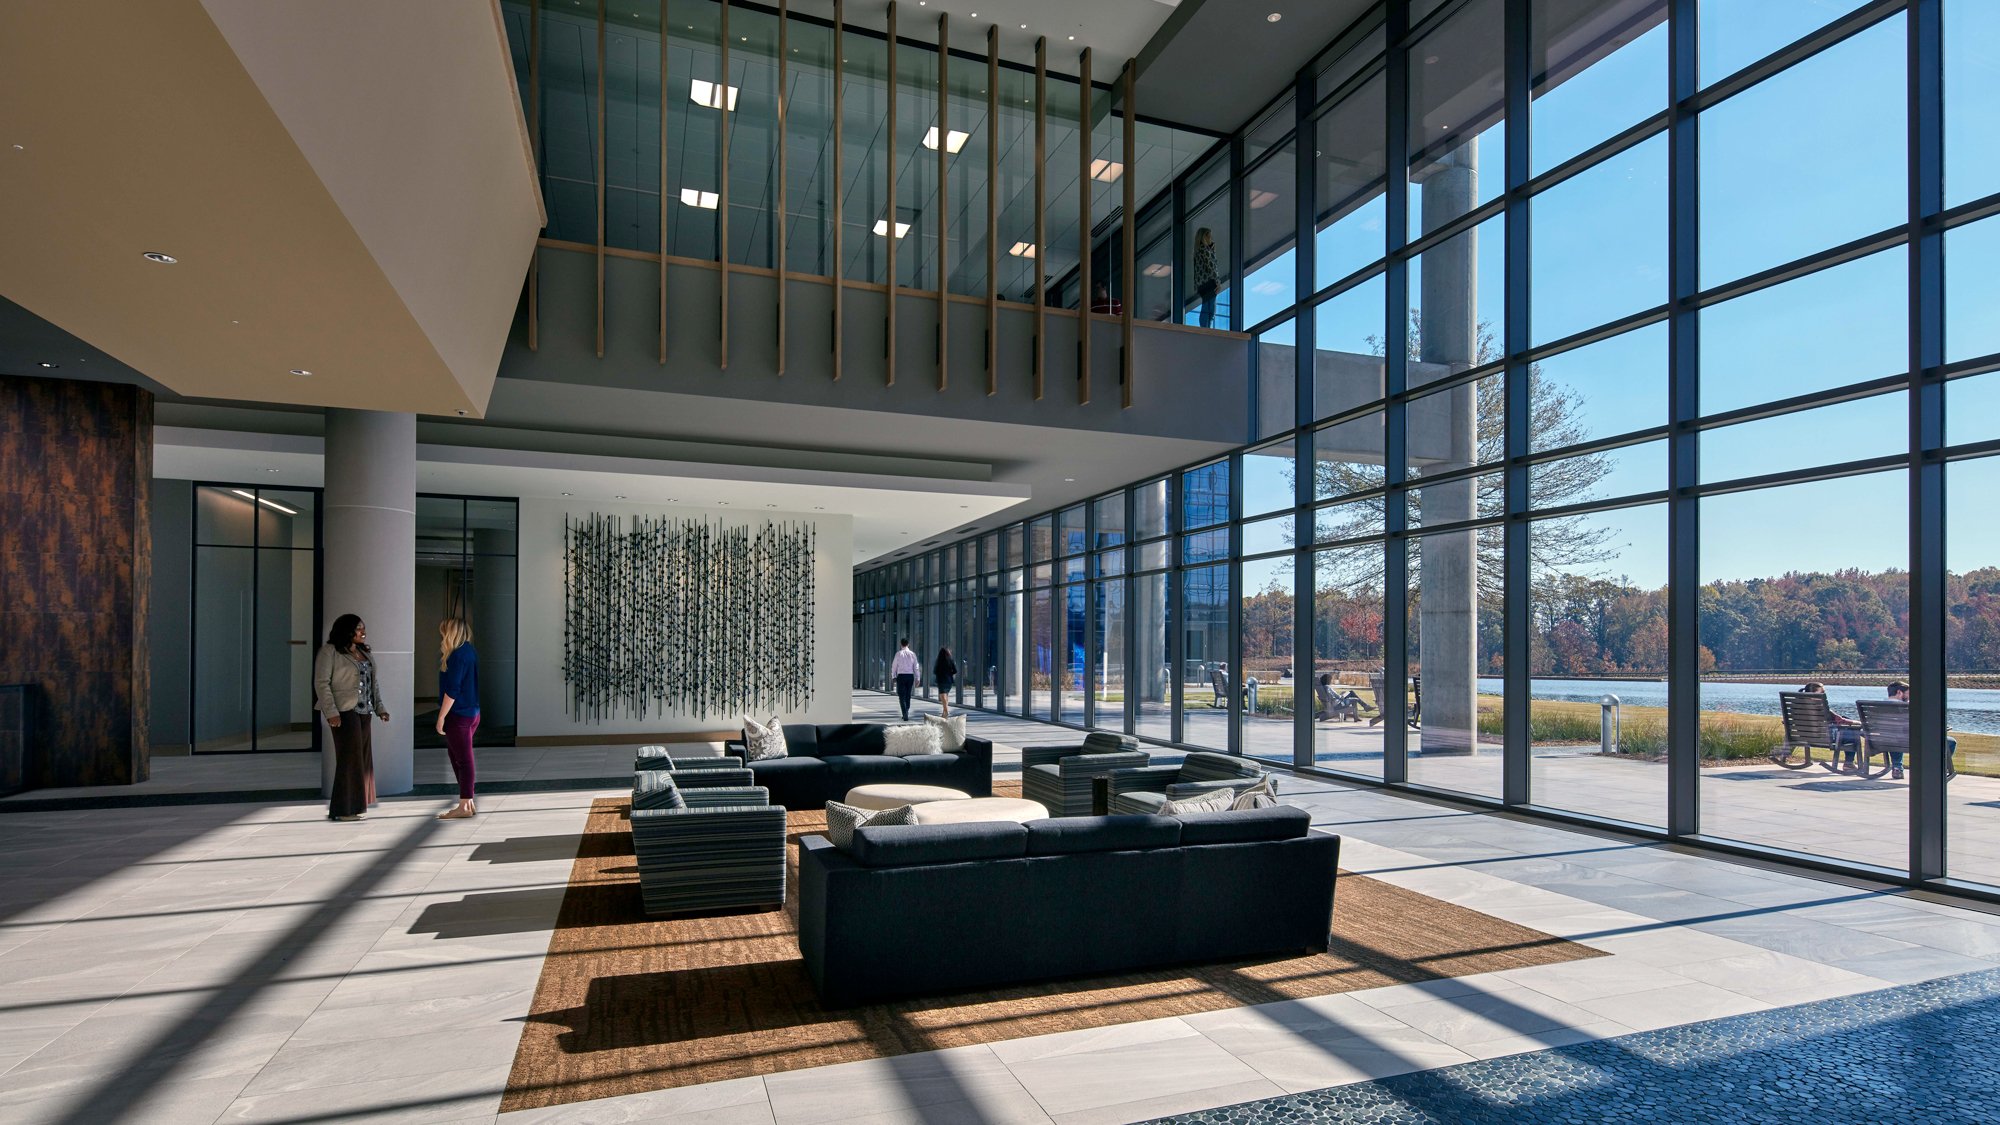 LPL Financial Carolinas Campus lobby interior - credit TVS Design